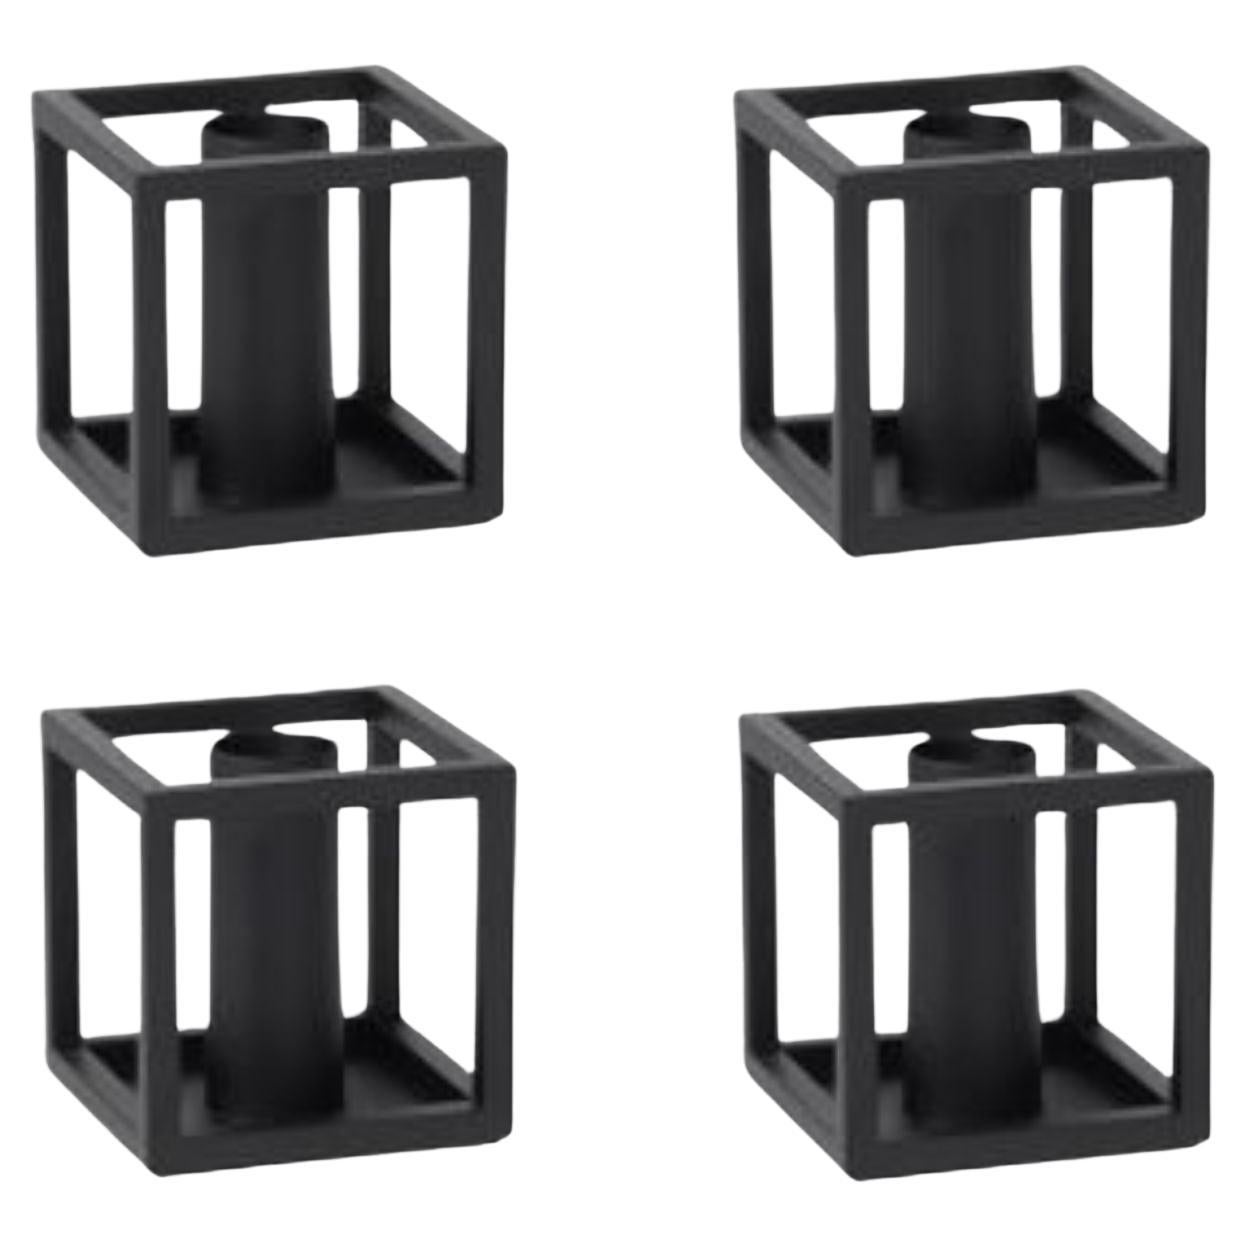 Set of 4 Black Kubus 1 Candle Holders by Lassen